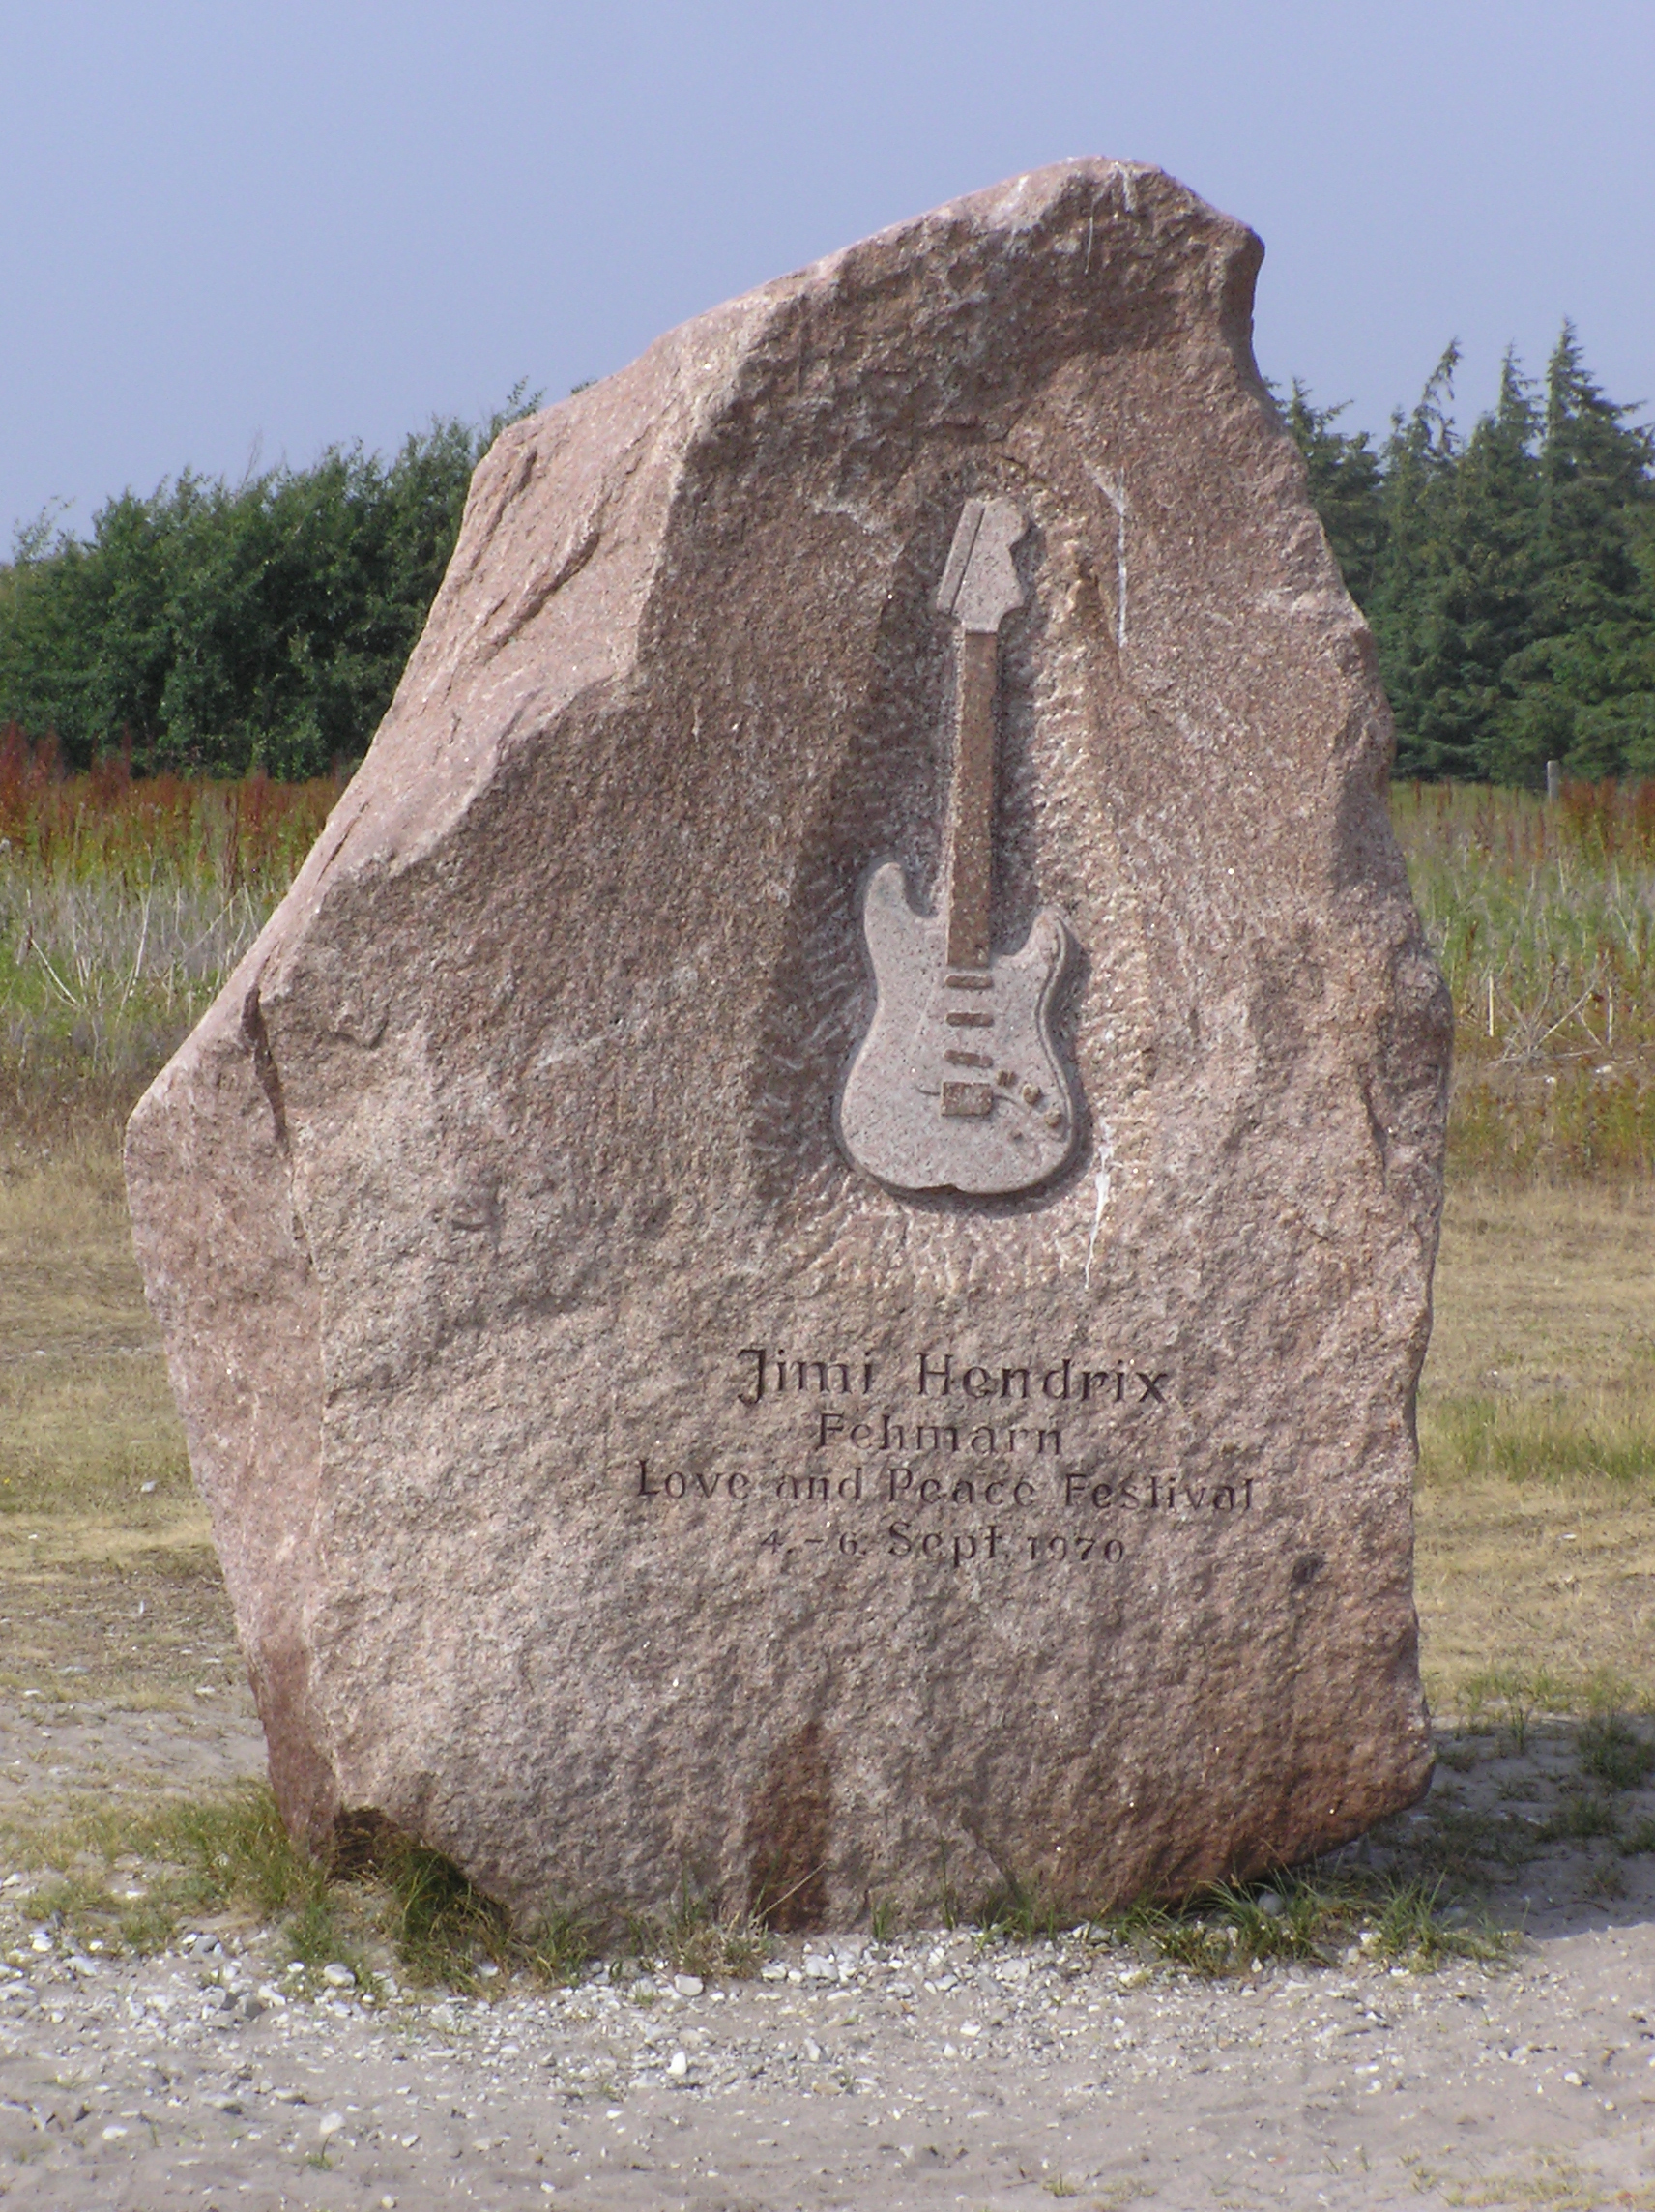 Jimi Hendrix Memorial, Fehmarn am Leuchtturm Flügge